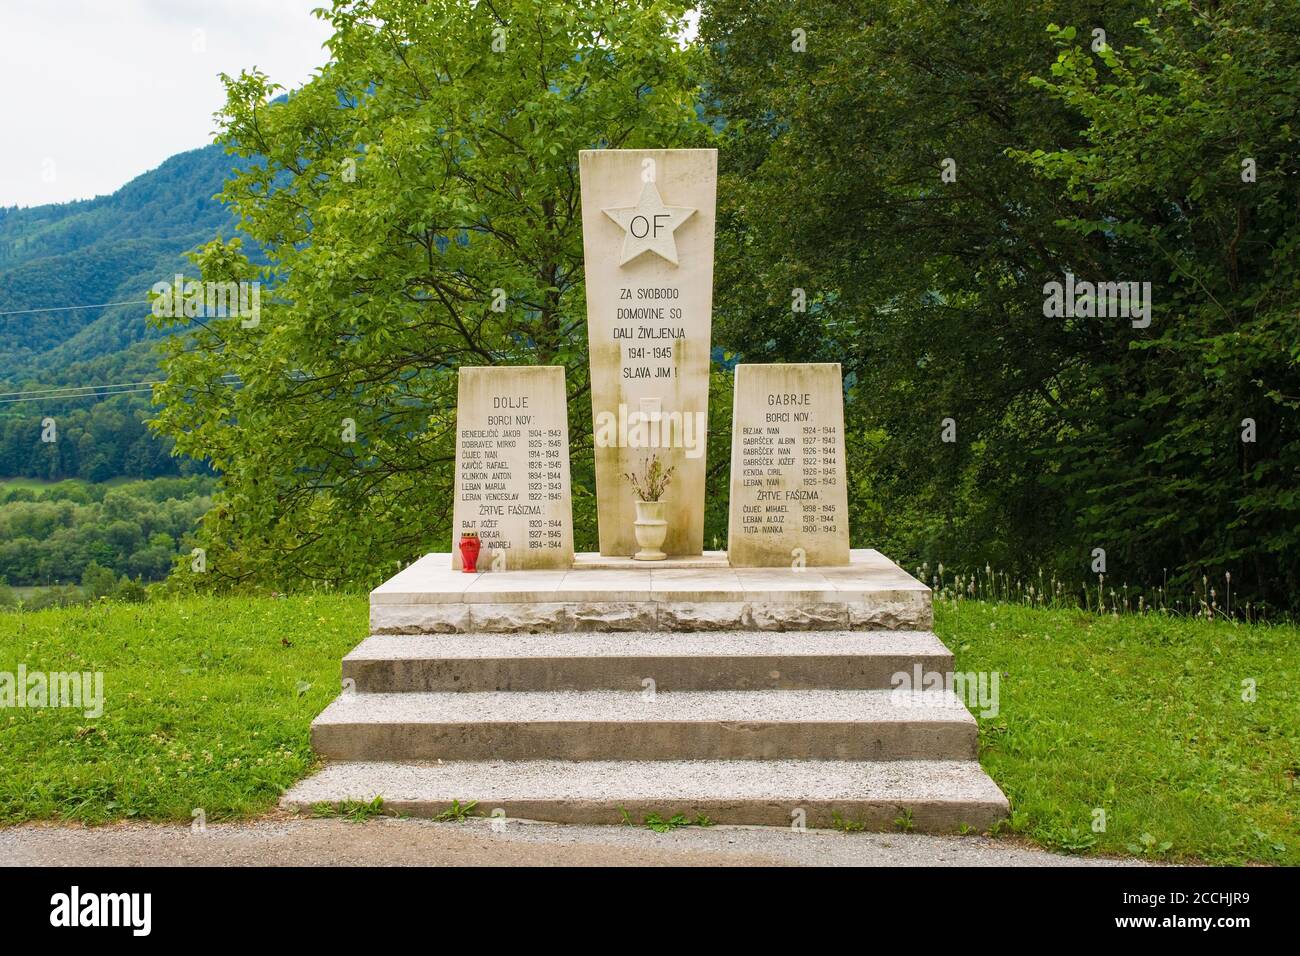 Dolje,Slovenia - July 26 2020. A memorial near the village of Dolje in Primorska, western Slovenia, commemorating those who died during World War II Stock Photo